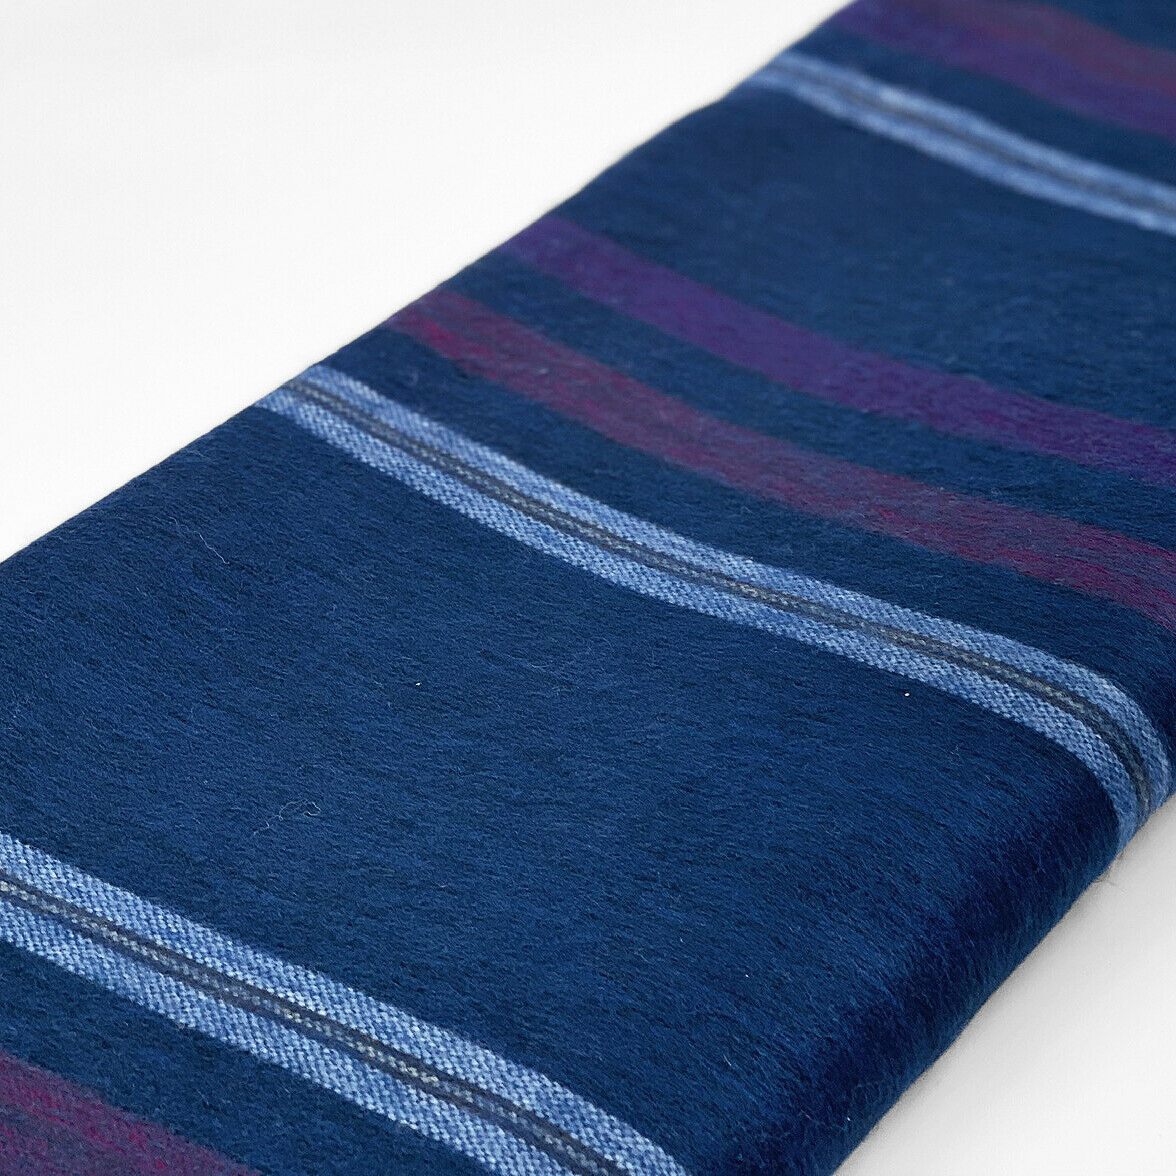 Tamboloma - Alpaca Wool Throw Blanket / Sofa Cover - Queen 90" x 67" - multi colored stripes pattern deep blue purple